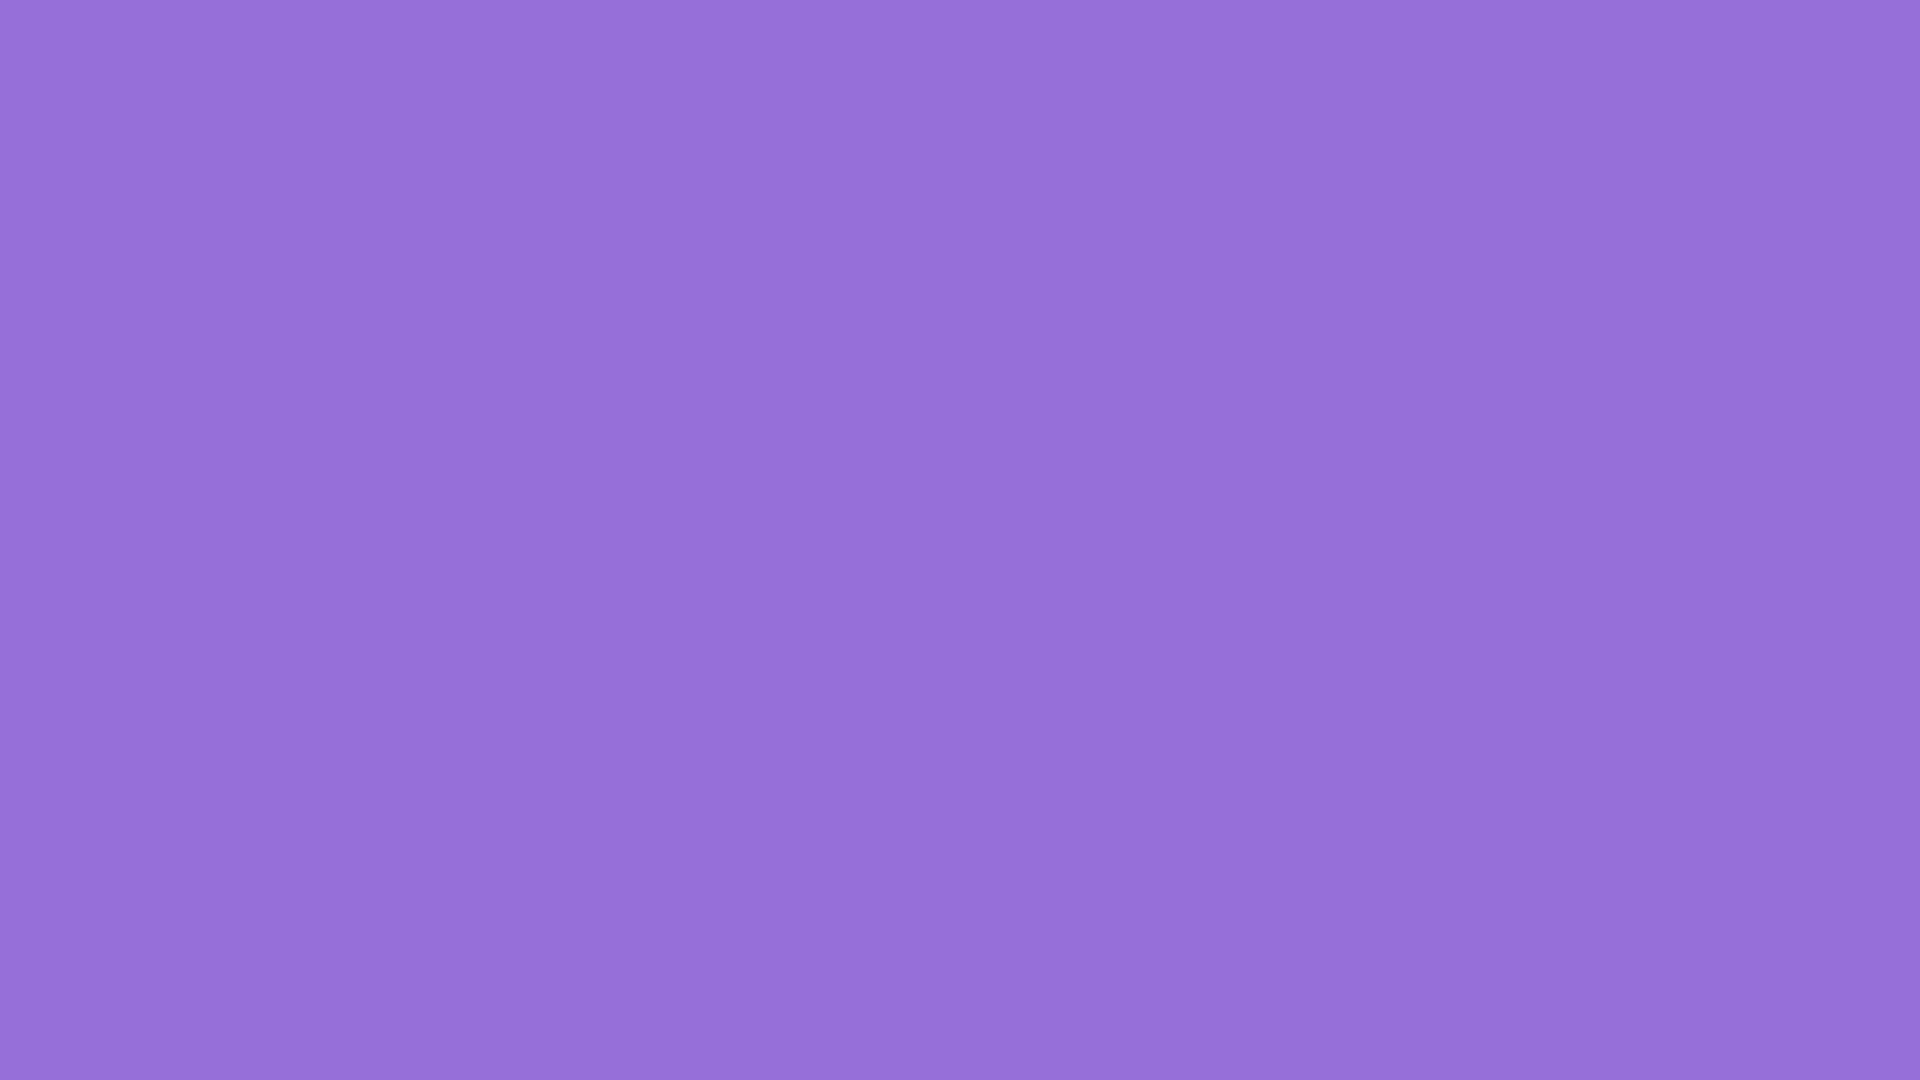 Soft Solid Purple Gradient Wallpaper